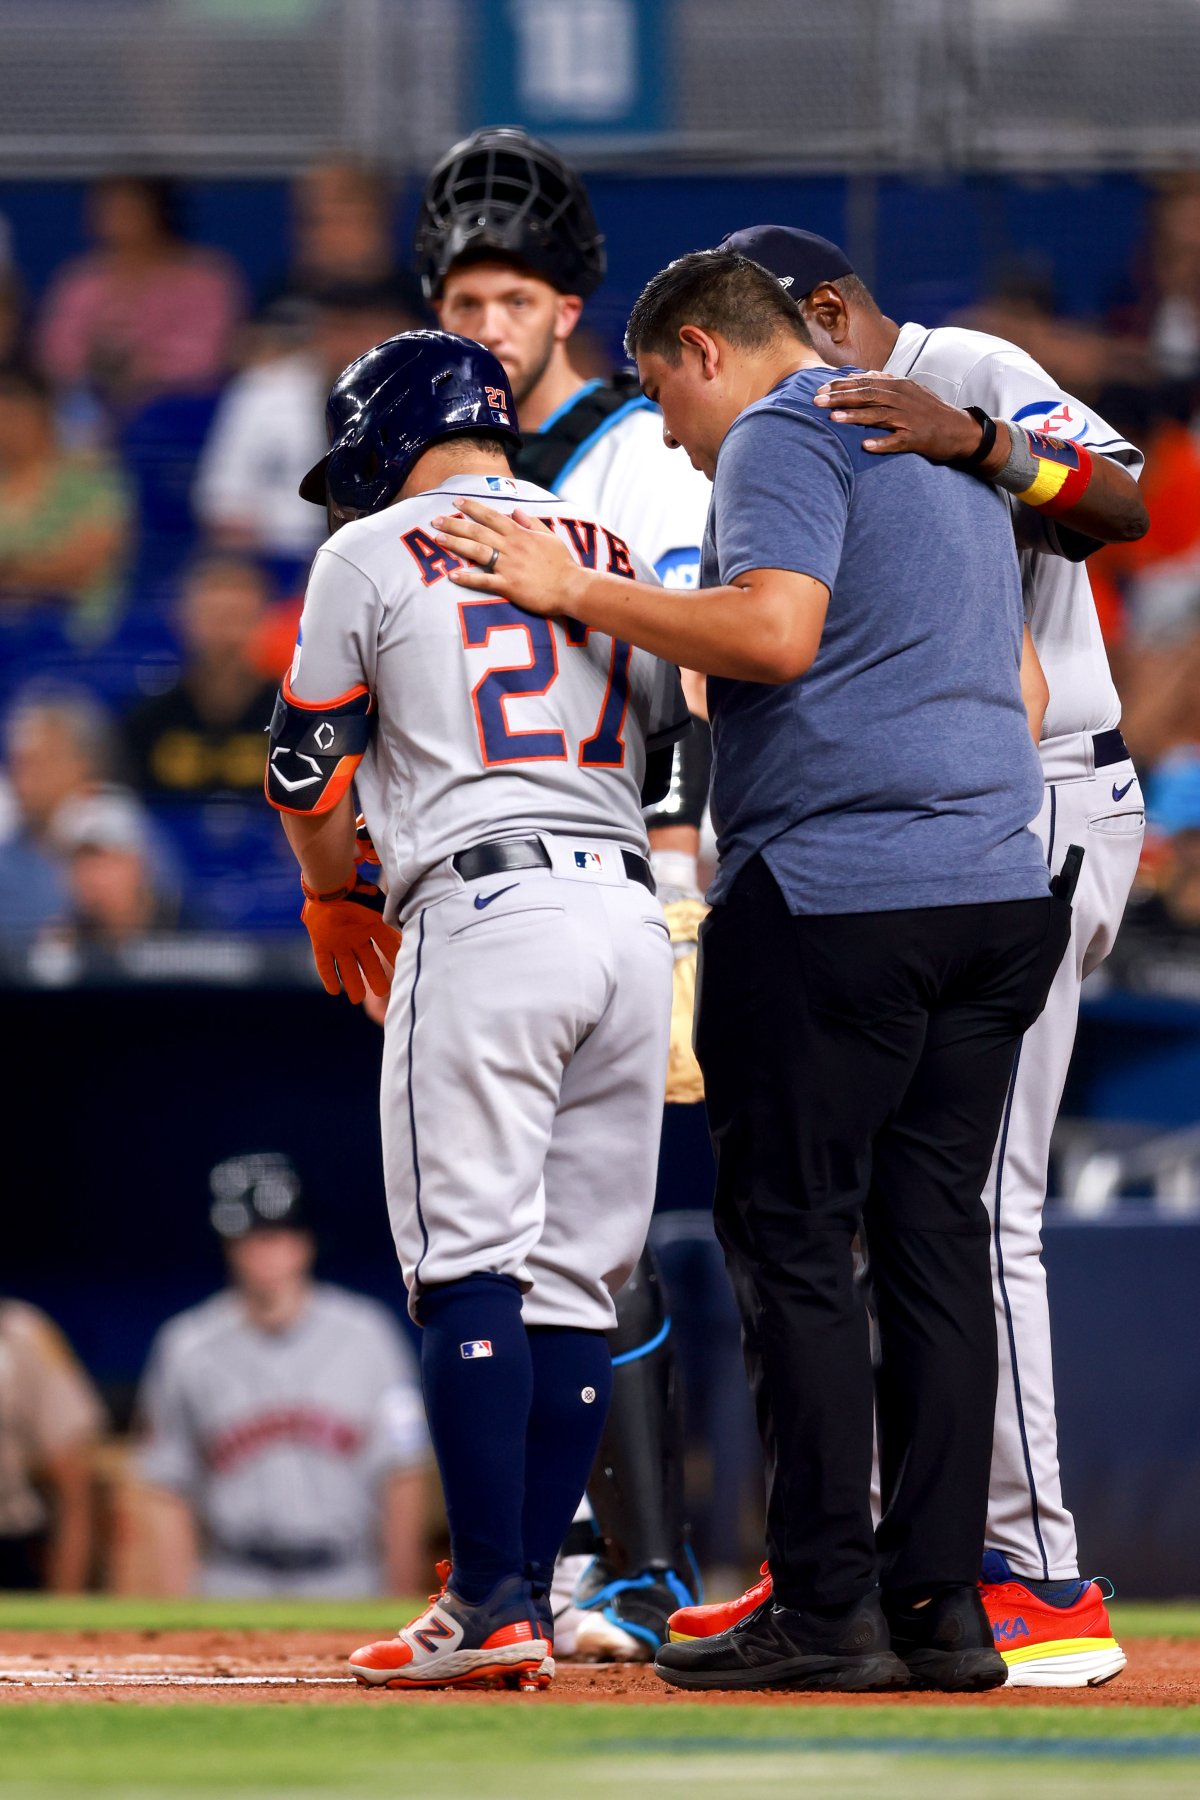 Astros' José Altuve's Height Mocked in New Photo Next to Yordan